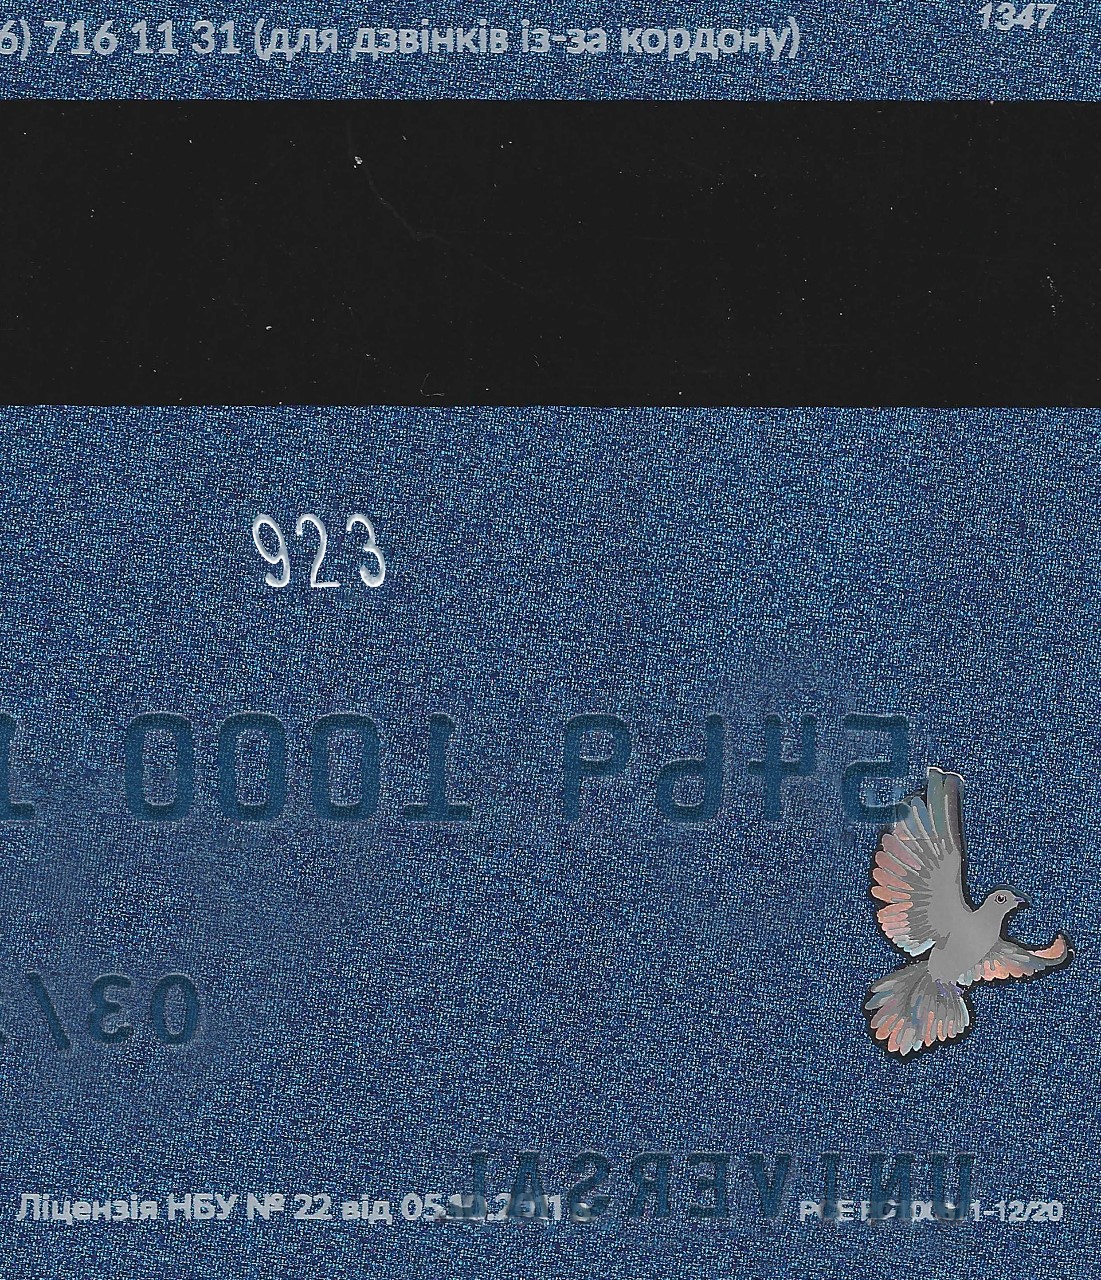 Ukraine Credit Card-4